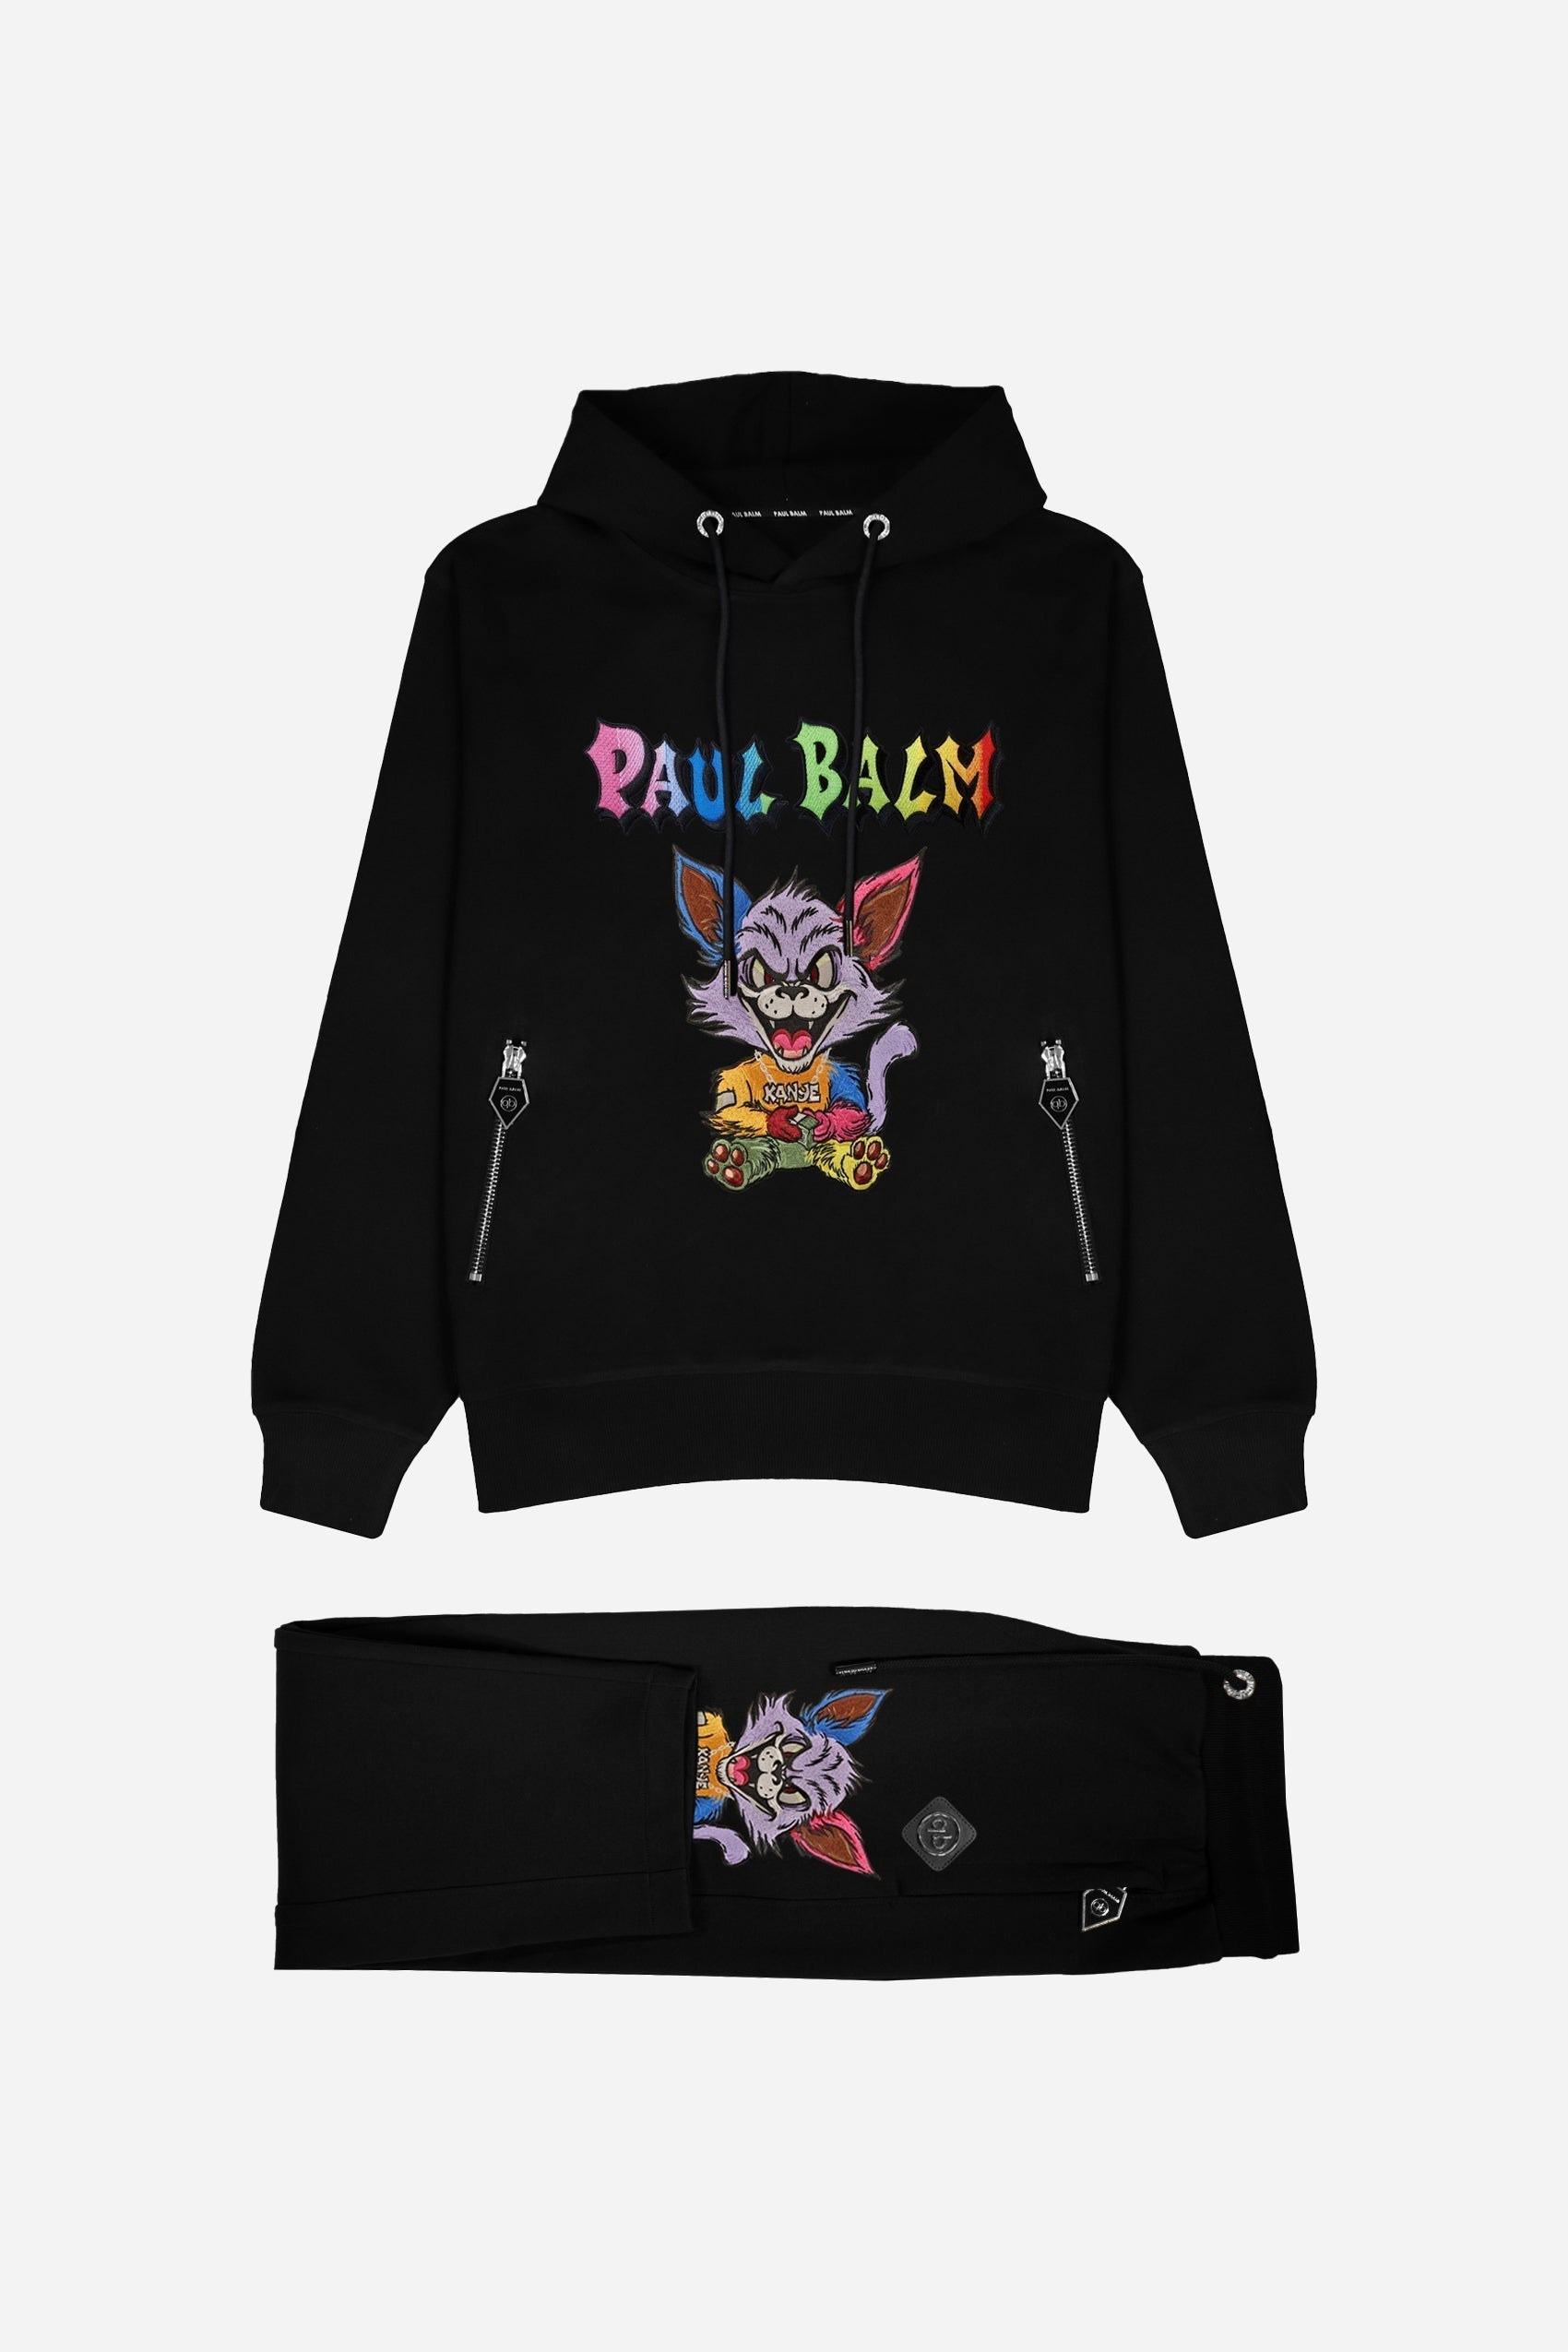 Embroidered Rainbow Kanye Set - Limited to 300 - PAUL BALM WORLD